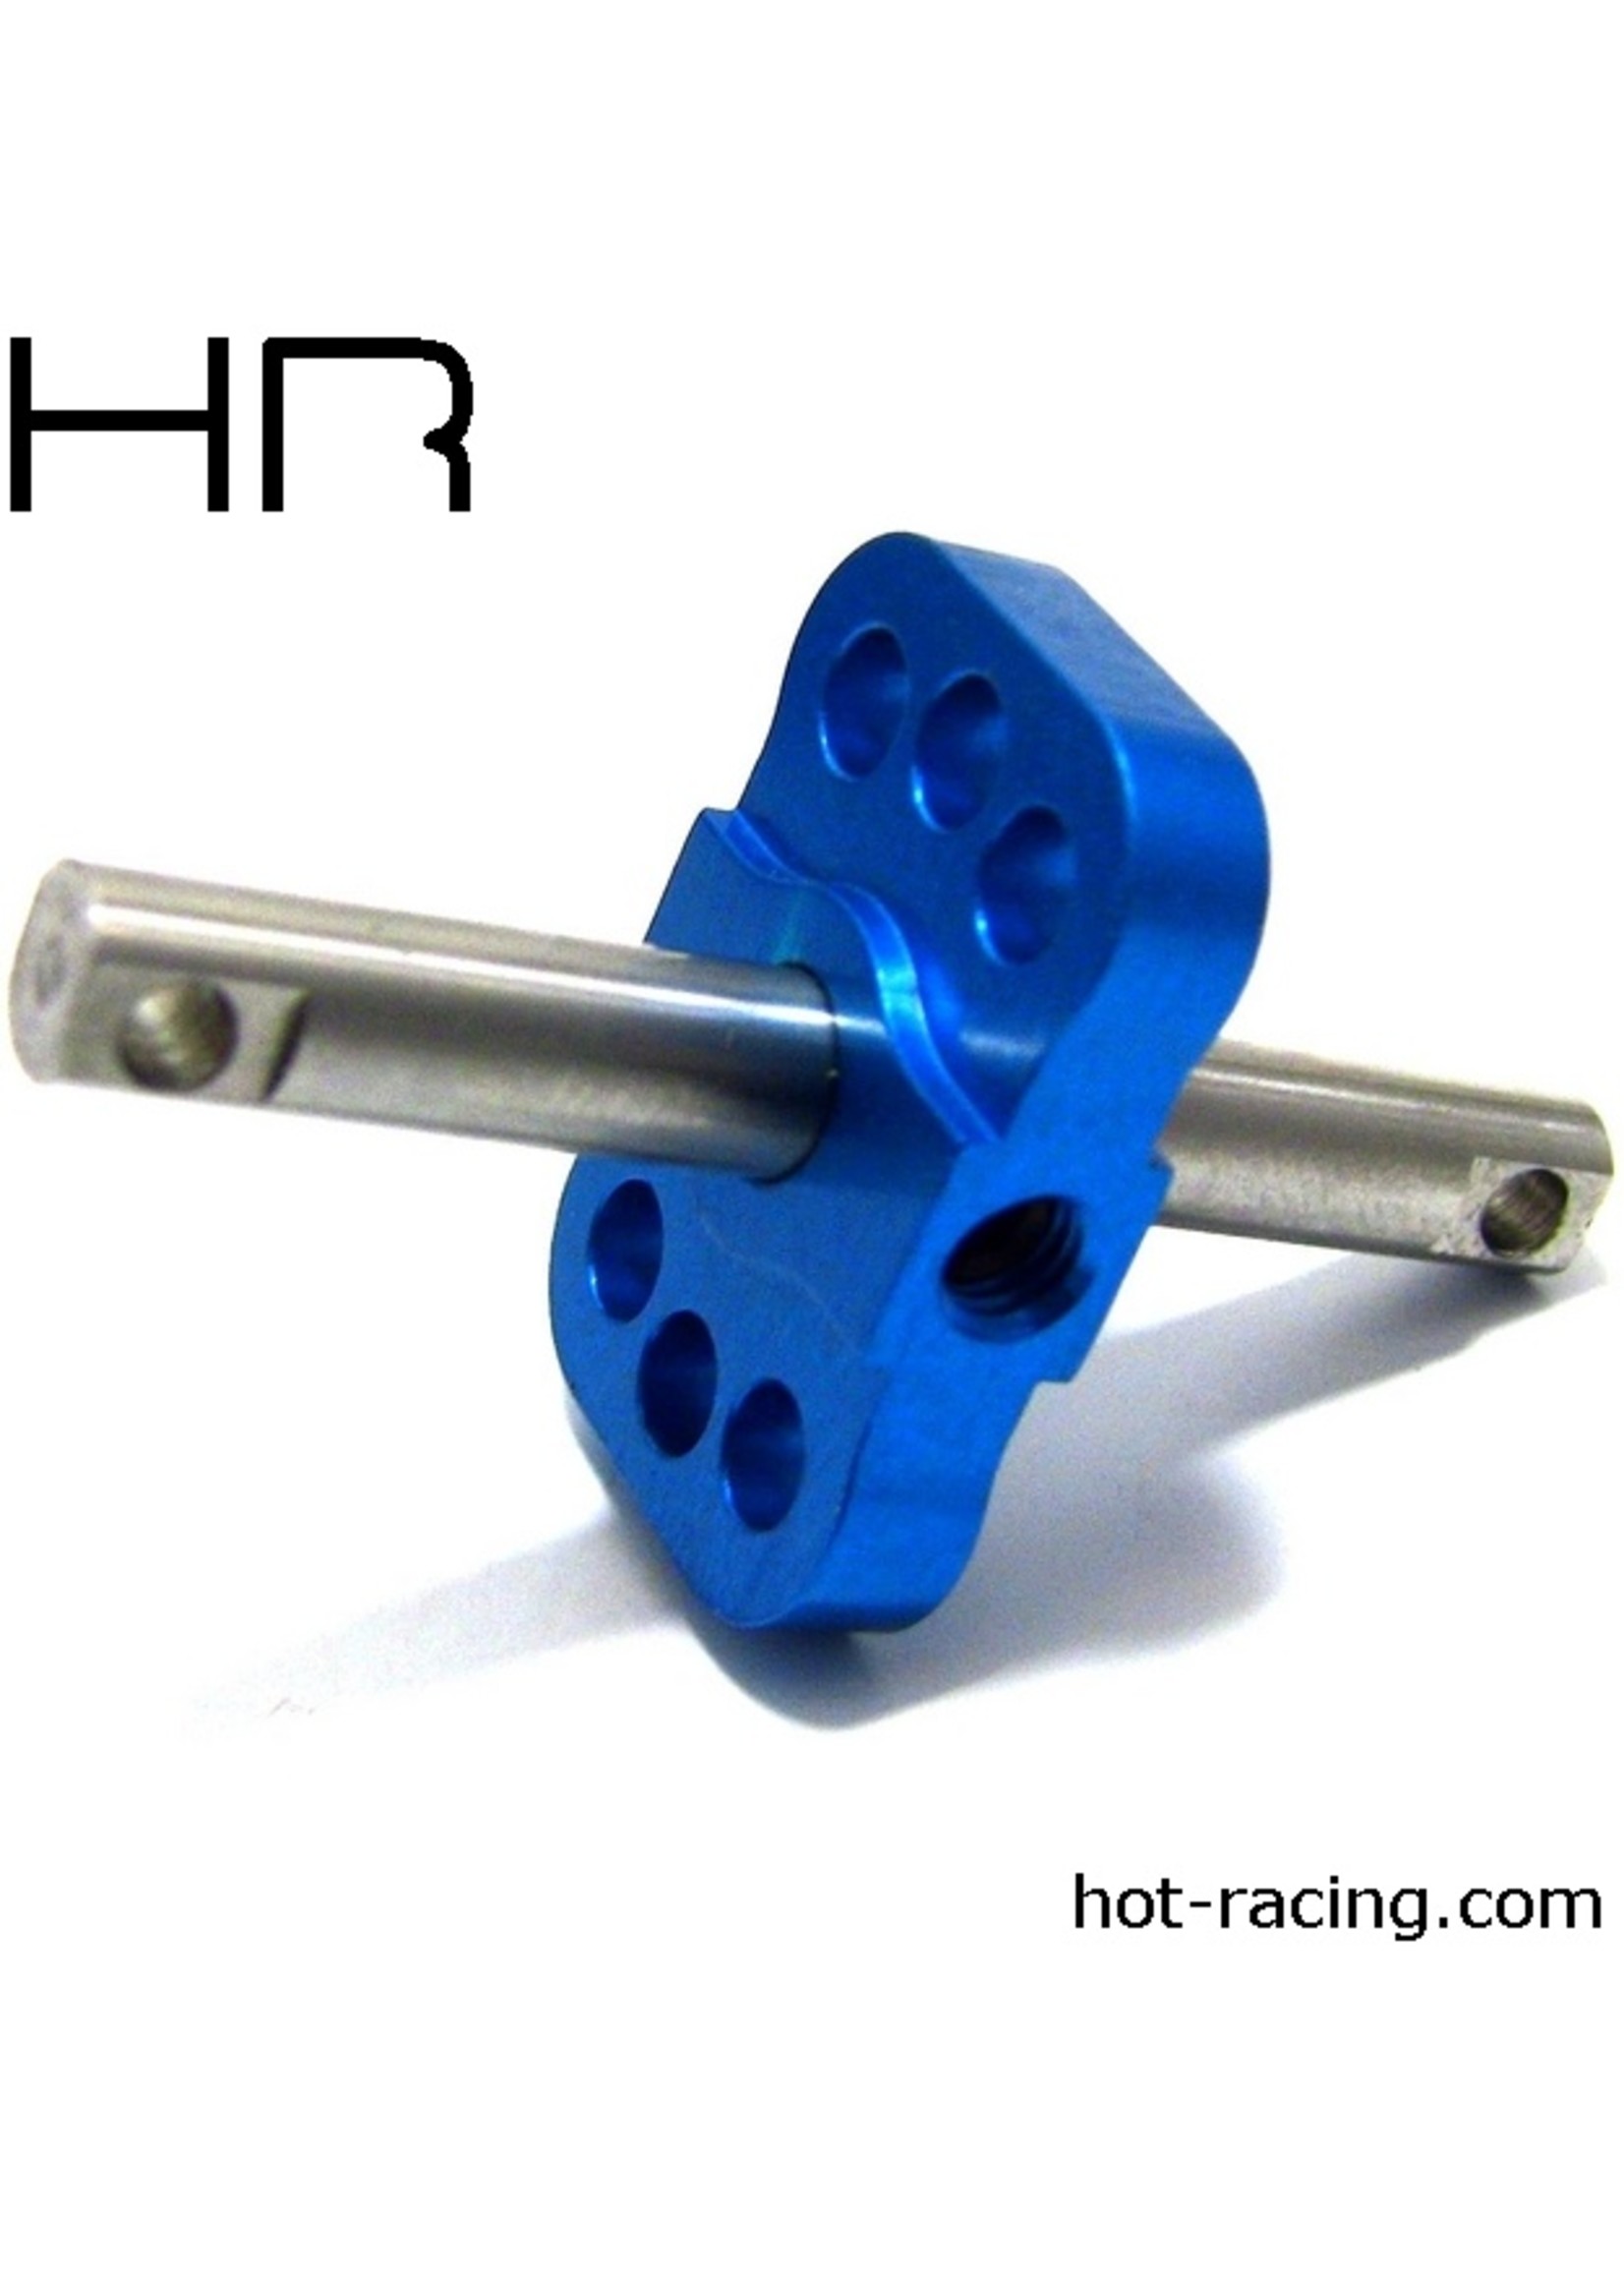 Hot Racing TE125 - Locked Diff Hub Spool for Traxxas Slash, Rustler, Stampede